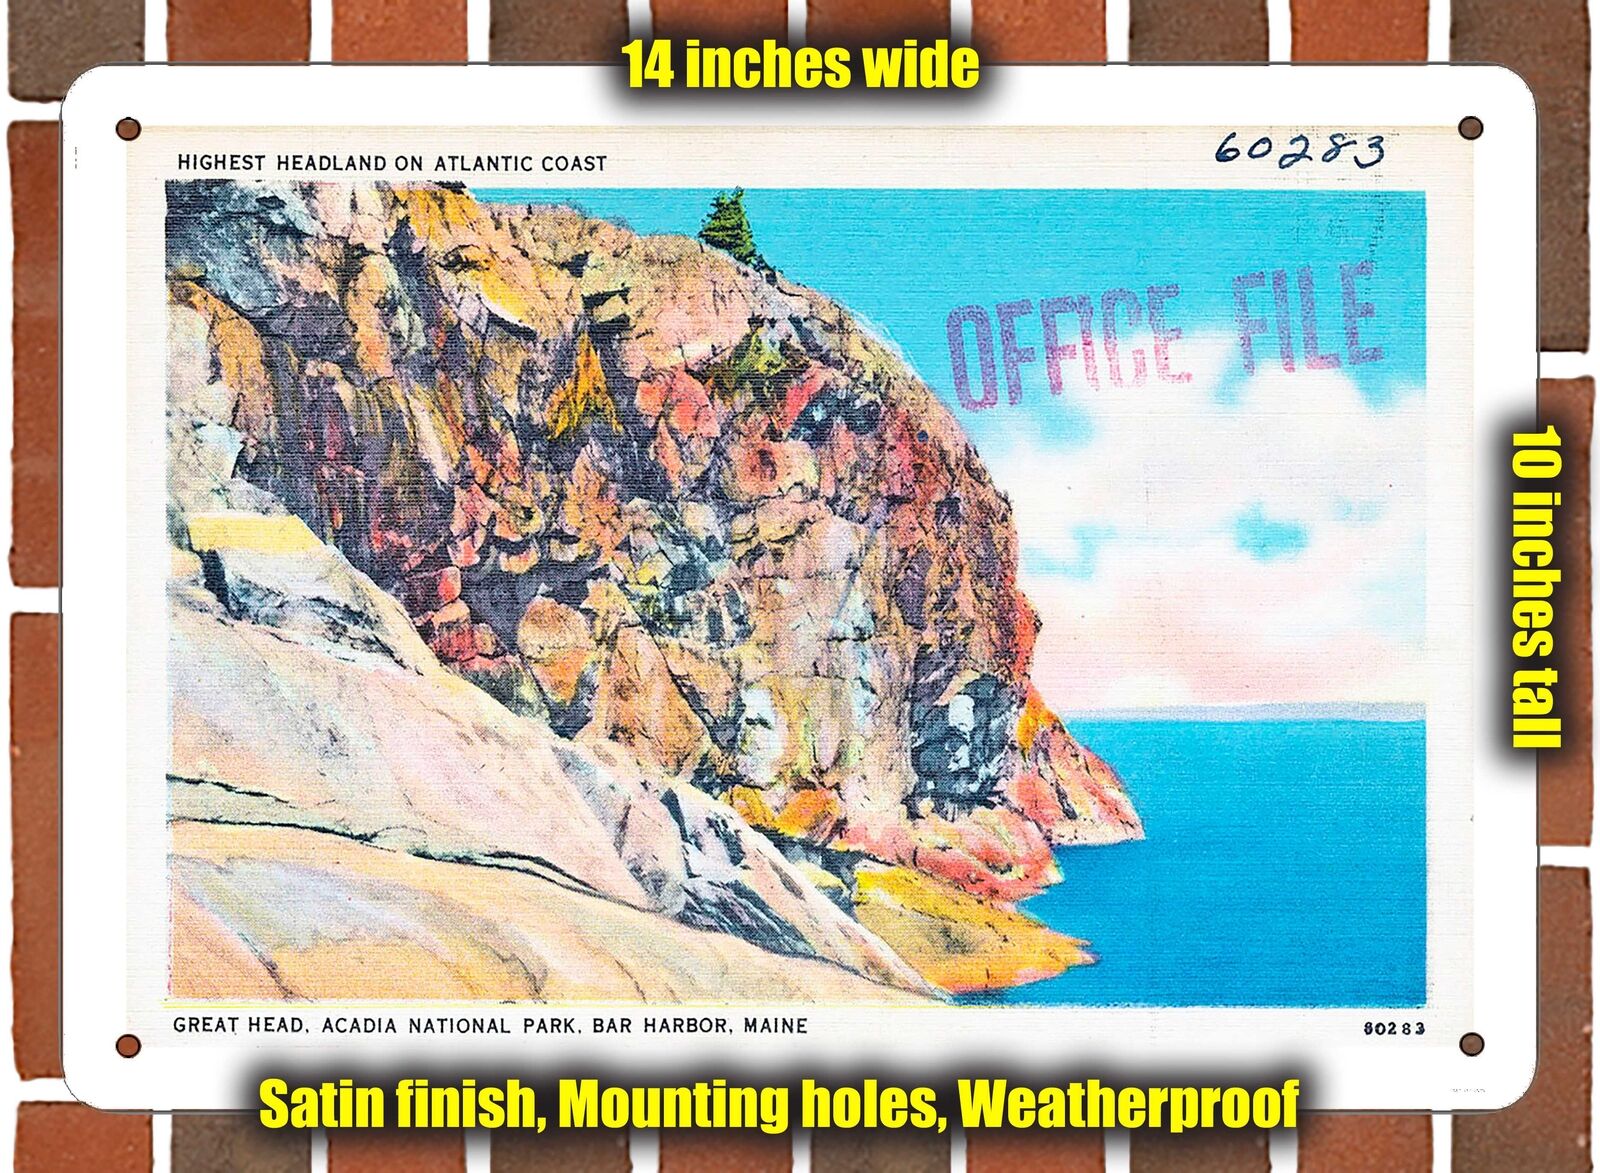 METAL SIGN - Maine Postcard - Highest Headland On Atlantic Coast, Great Head, A